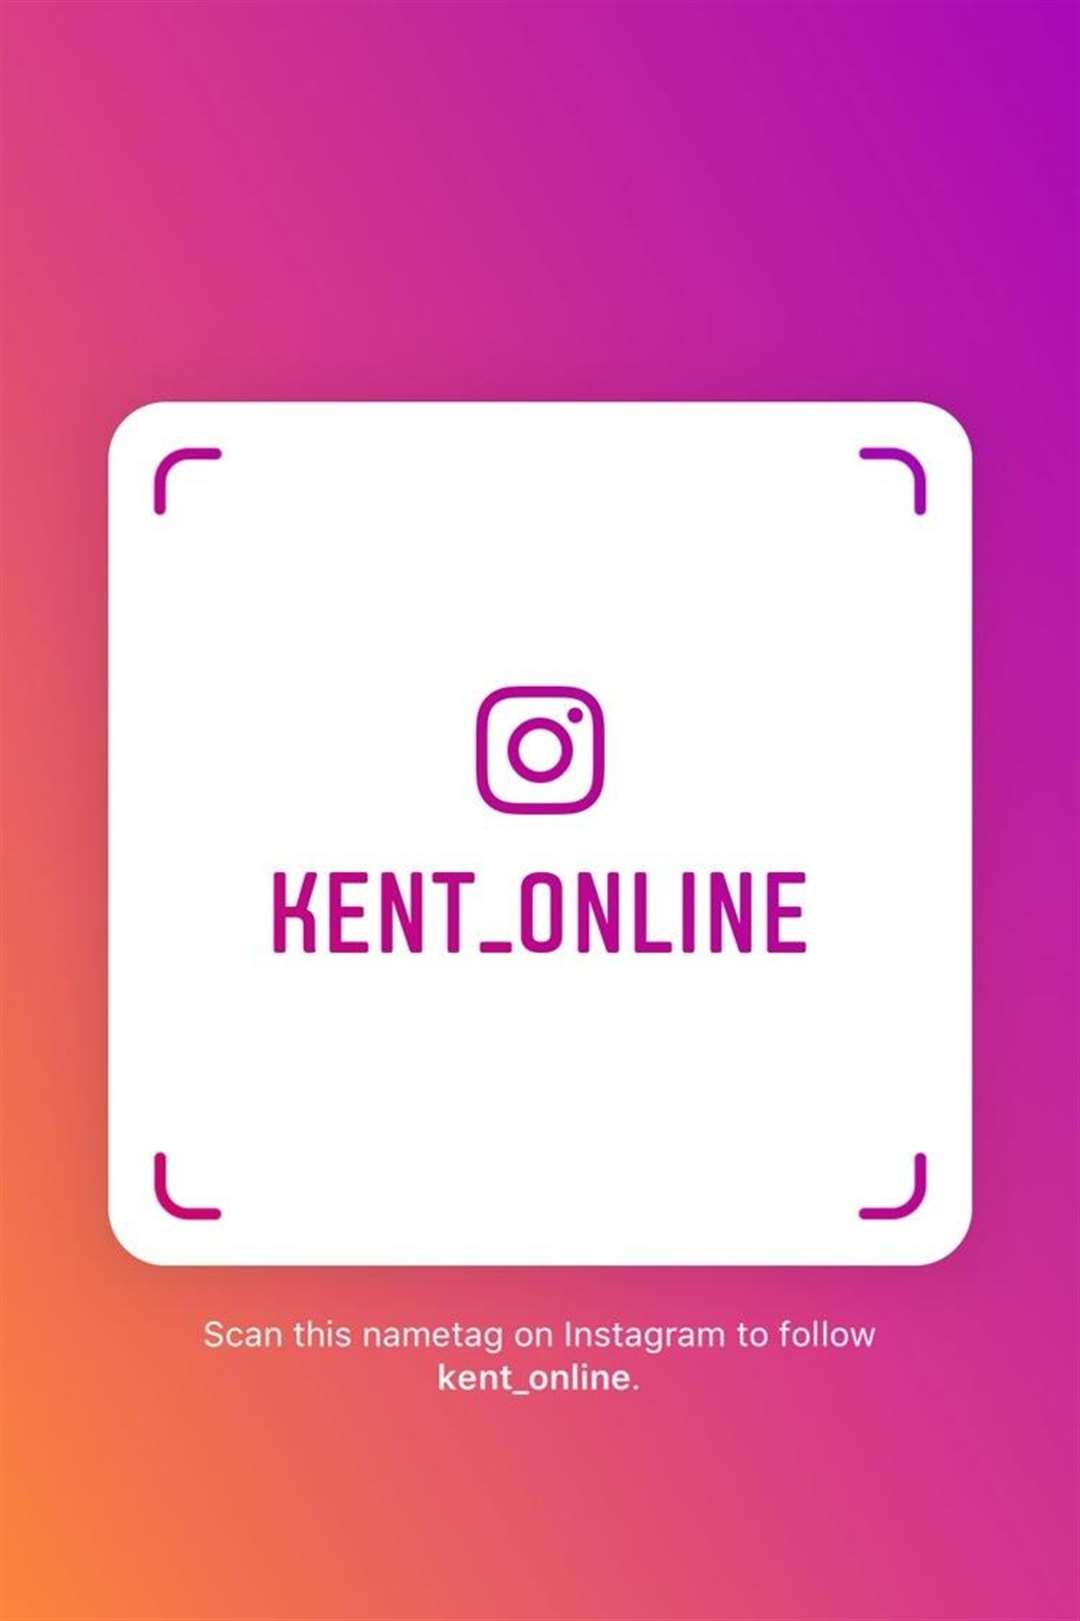 The KentOnline Instagram nametag